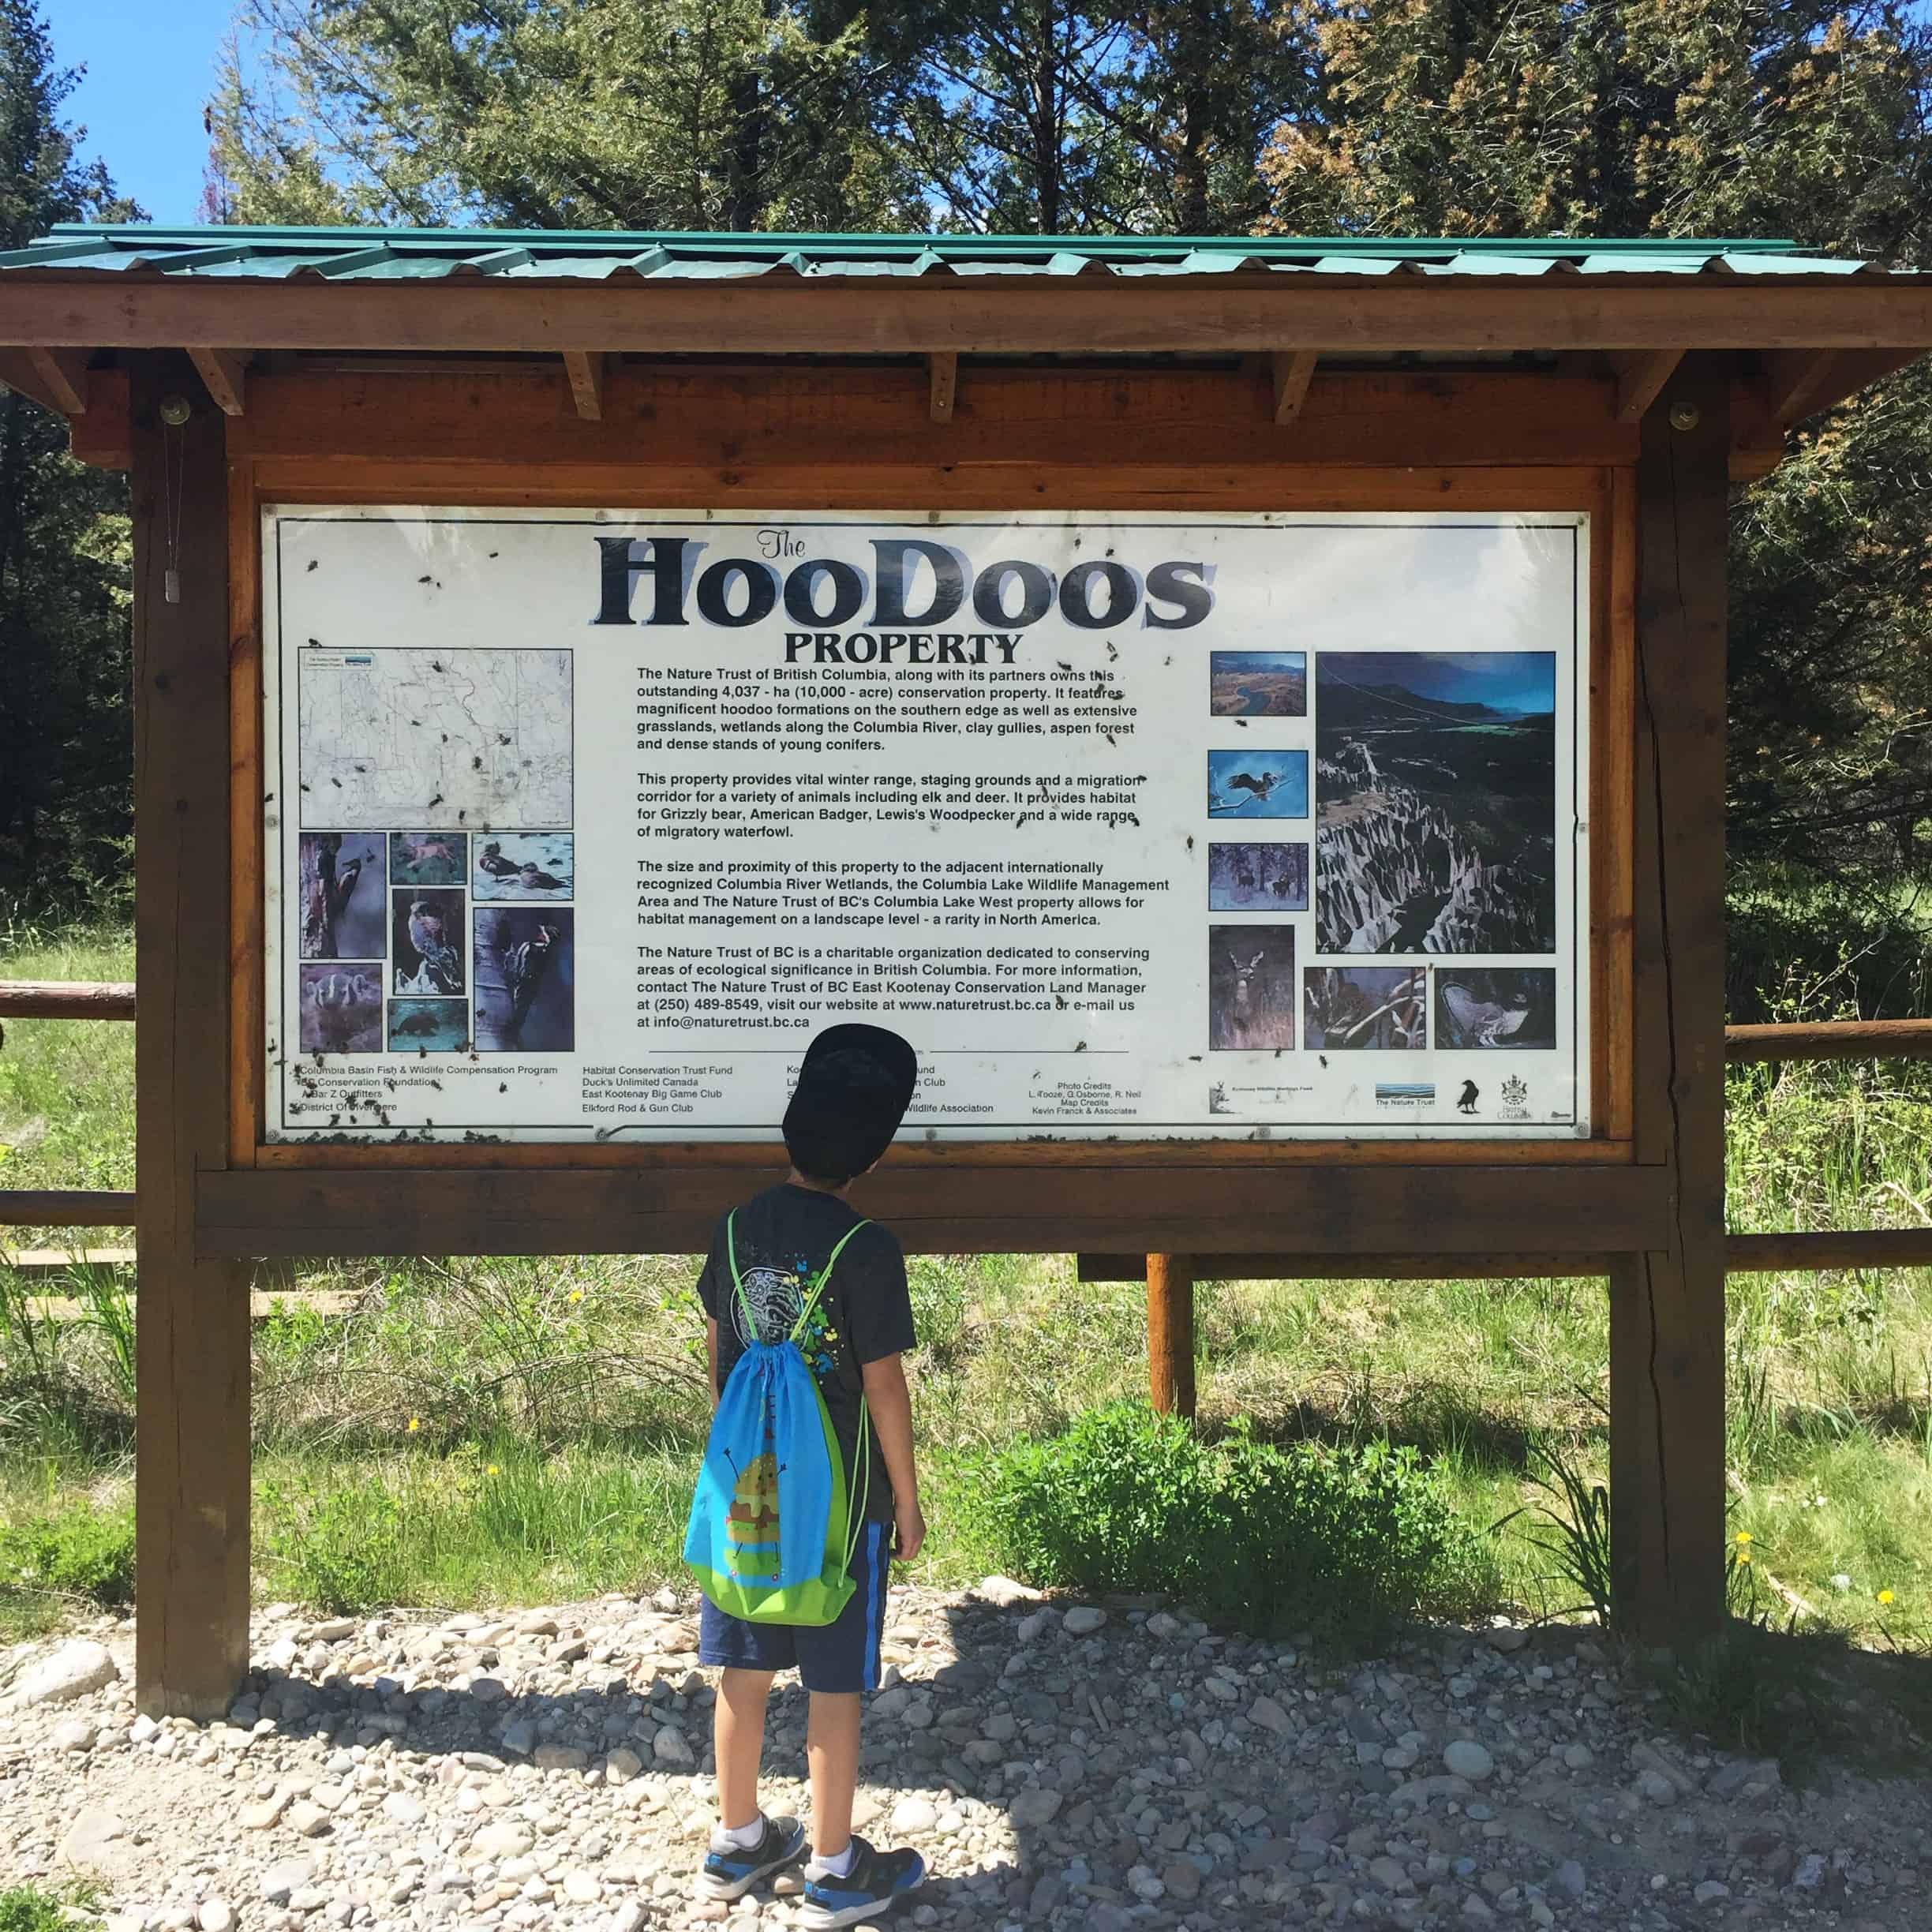 Hike: The Hoodoo Trail At Fairmont Hot Springs, BC